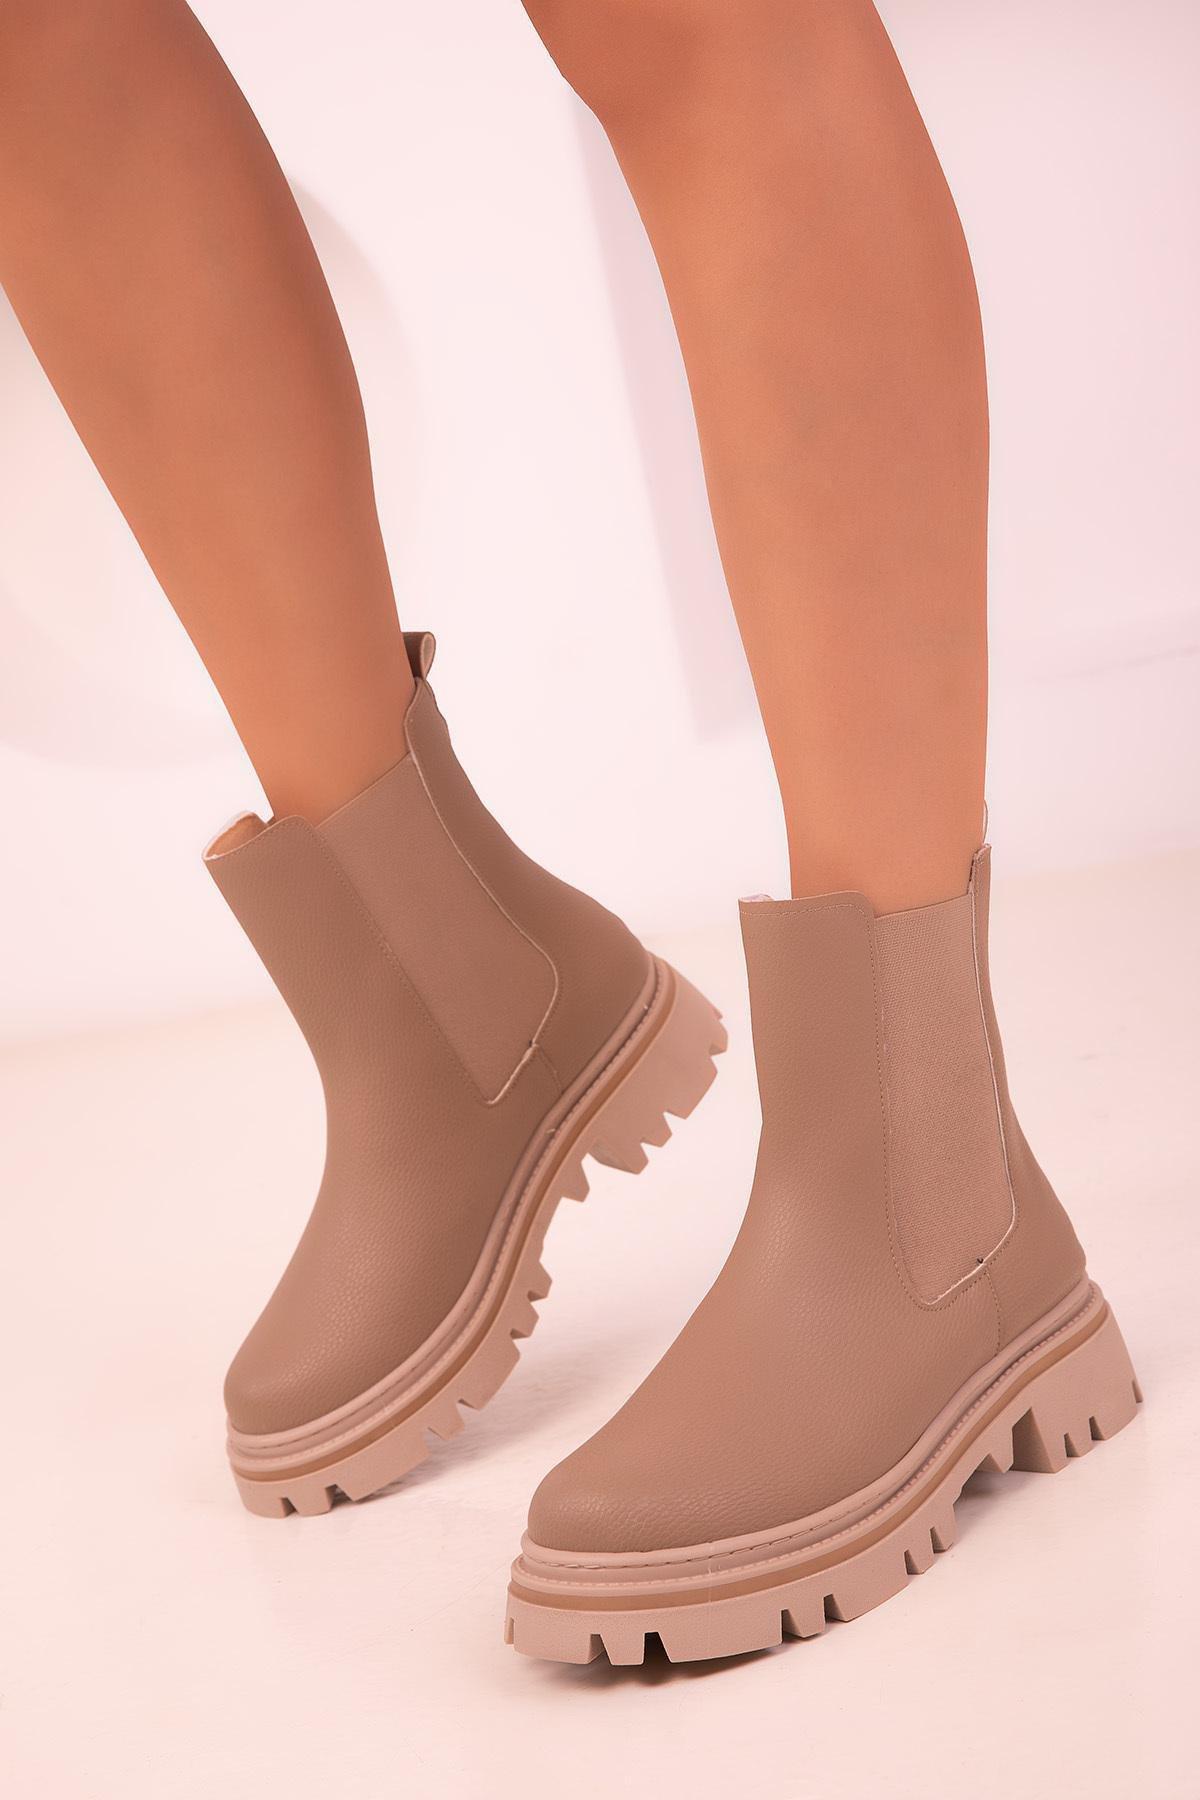 SOHO - Beige Low Heel Ankle Boots